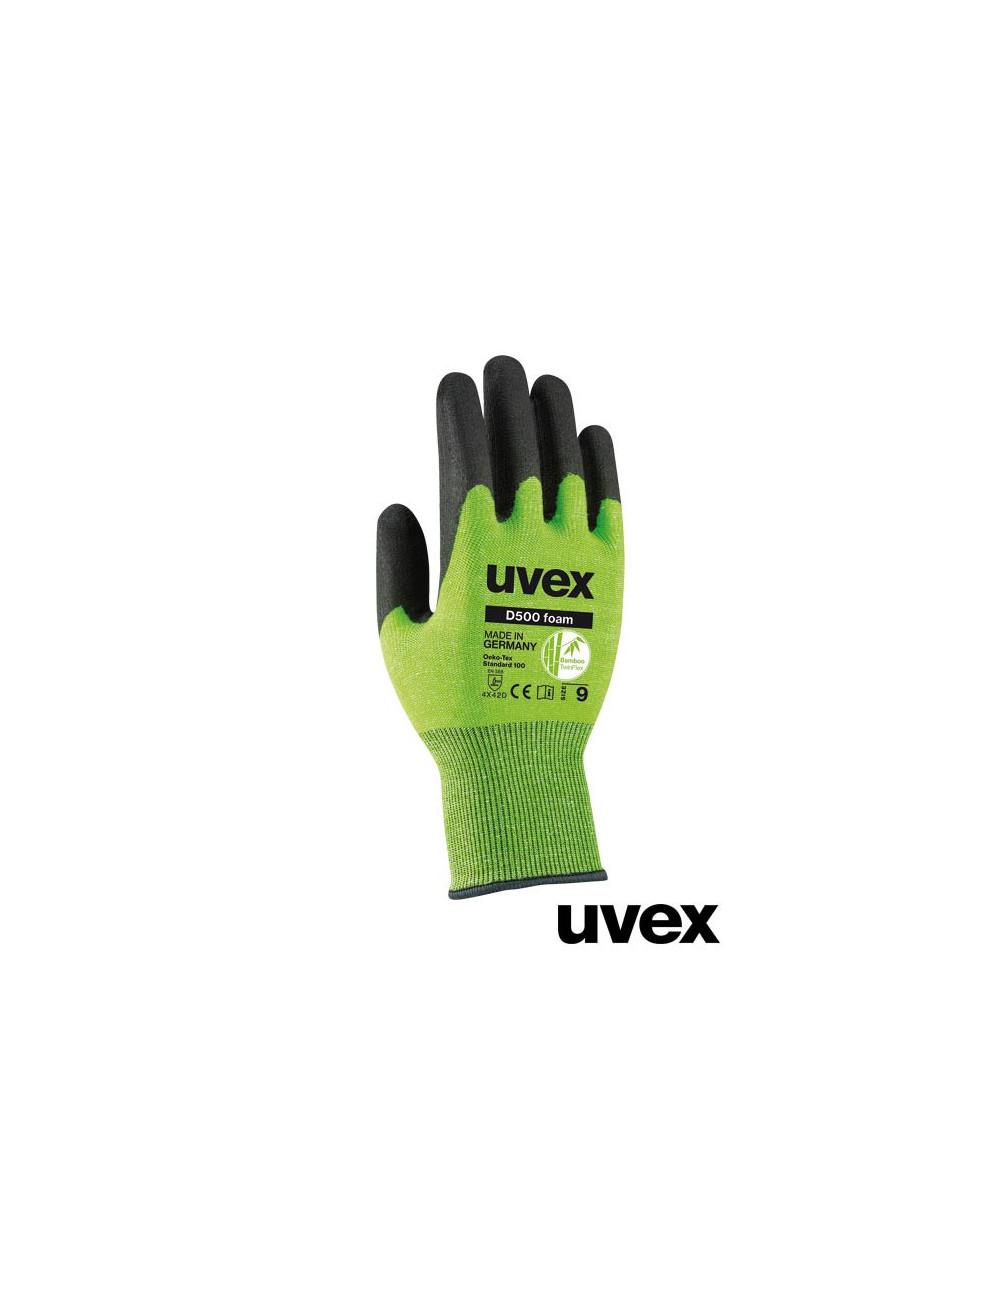 Protective gloves zb green-black Uvex Ruvex-d500foam